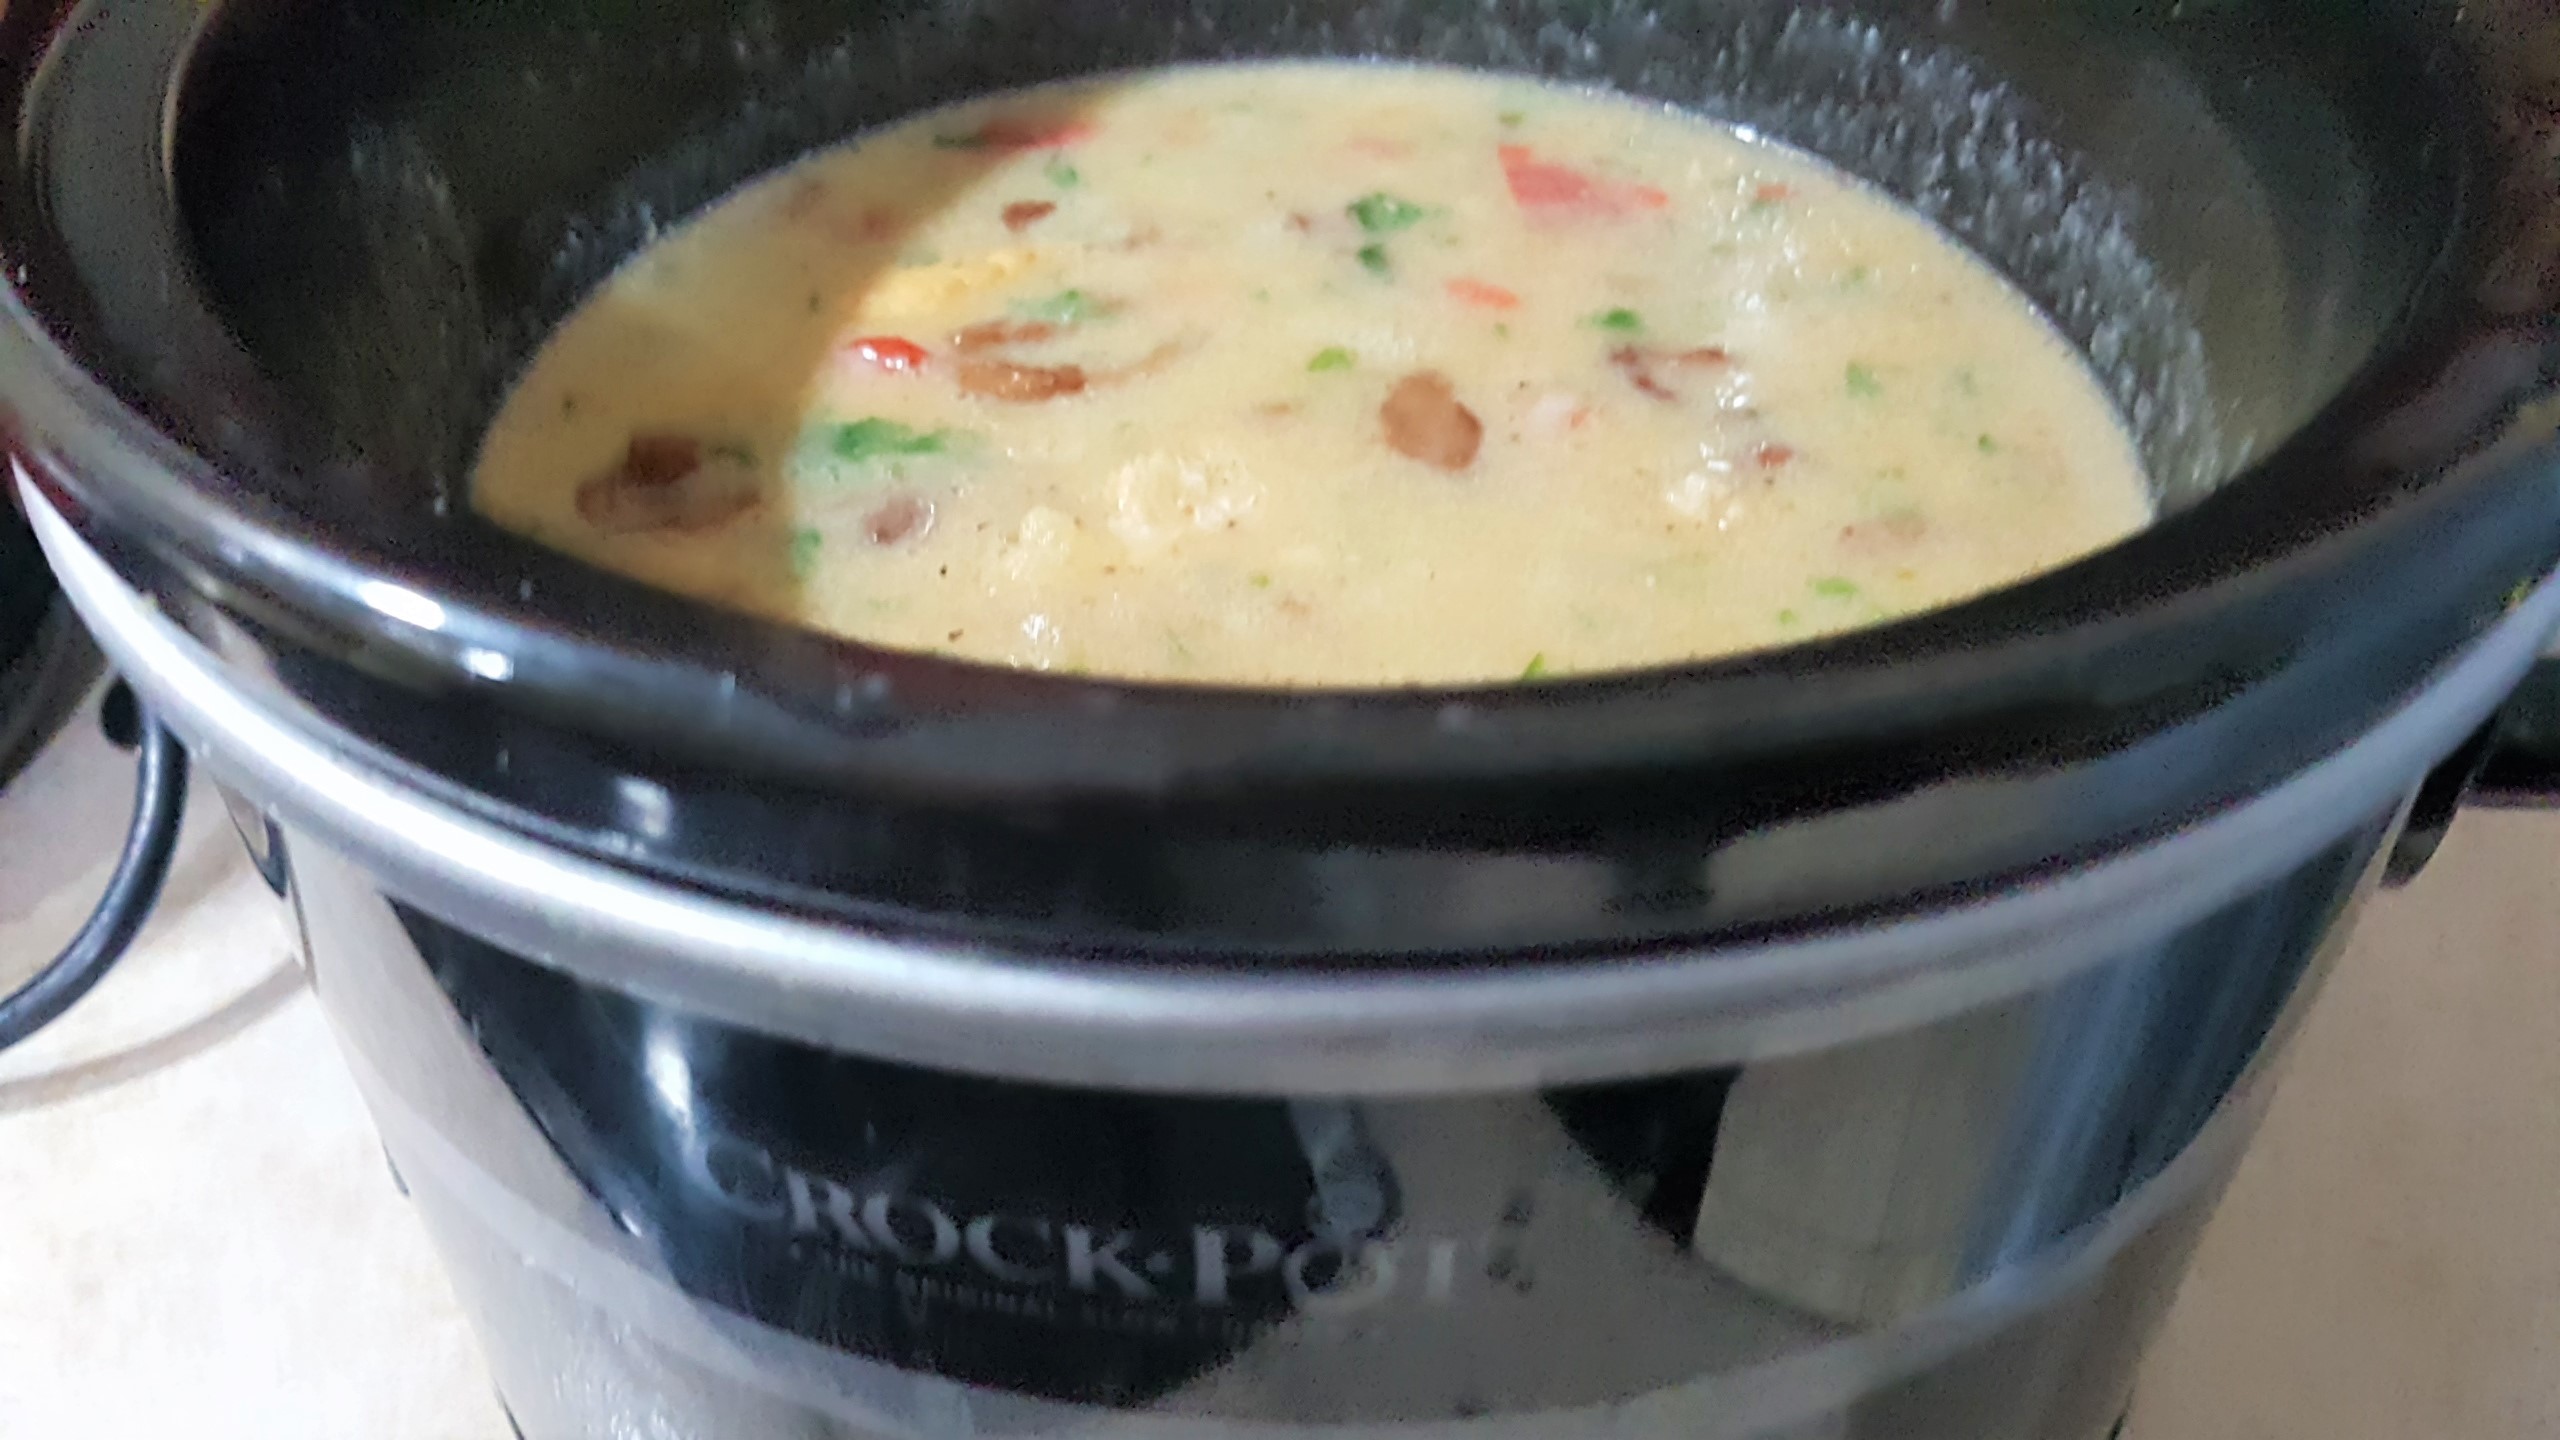 Papricas cu piept de pui si galbiori la slow cooker Crock Pot